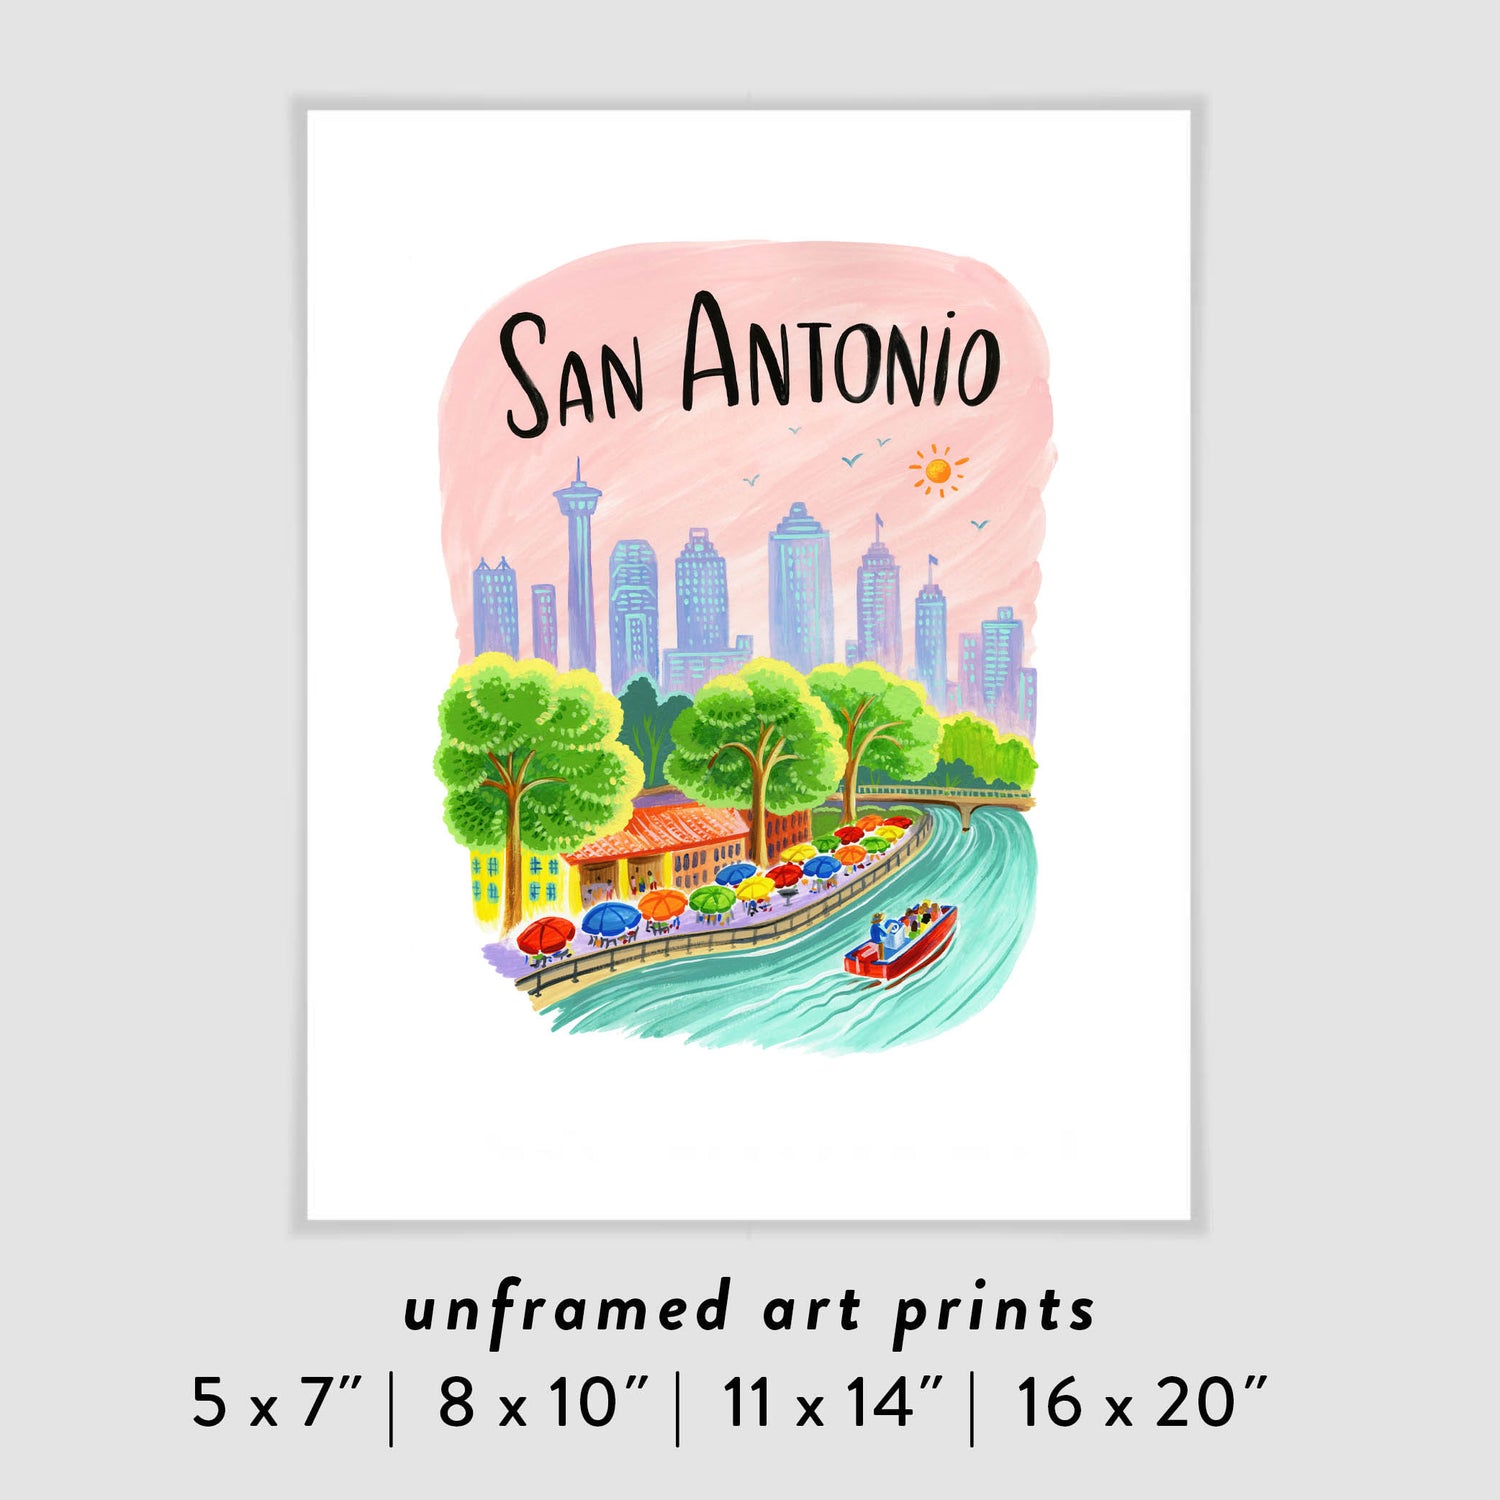 San Antonio Texas Skyline CIty Poster with Riverwalk Illustration 